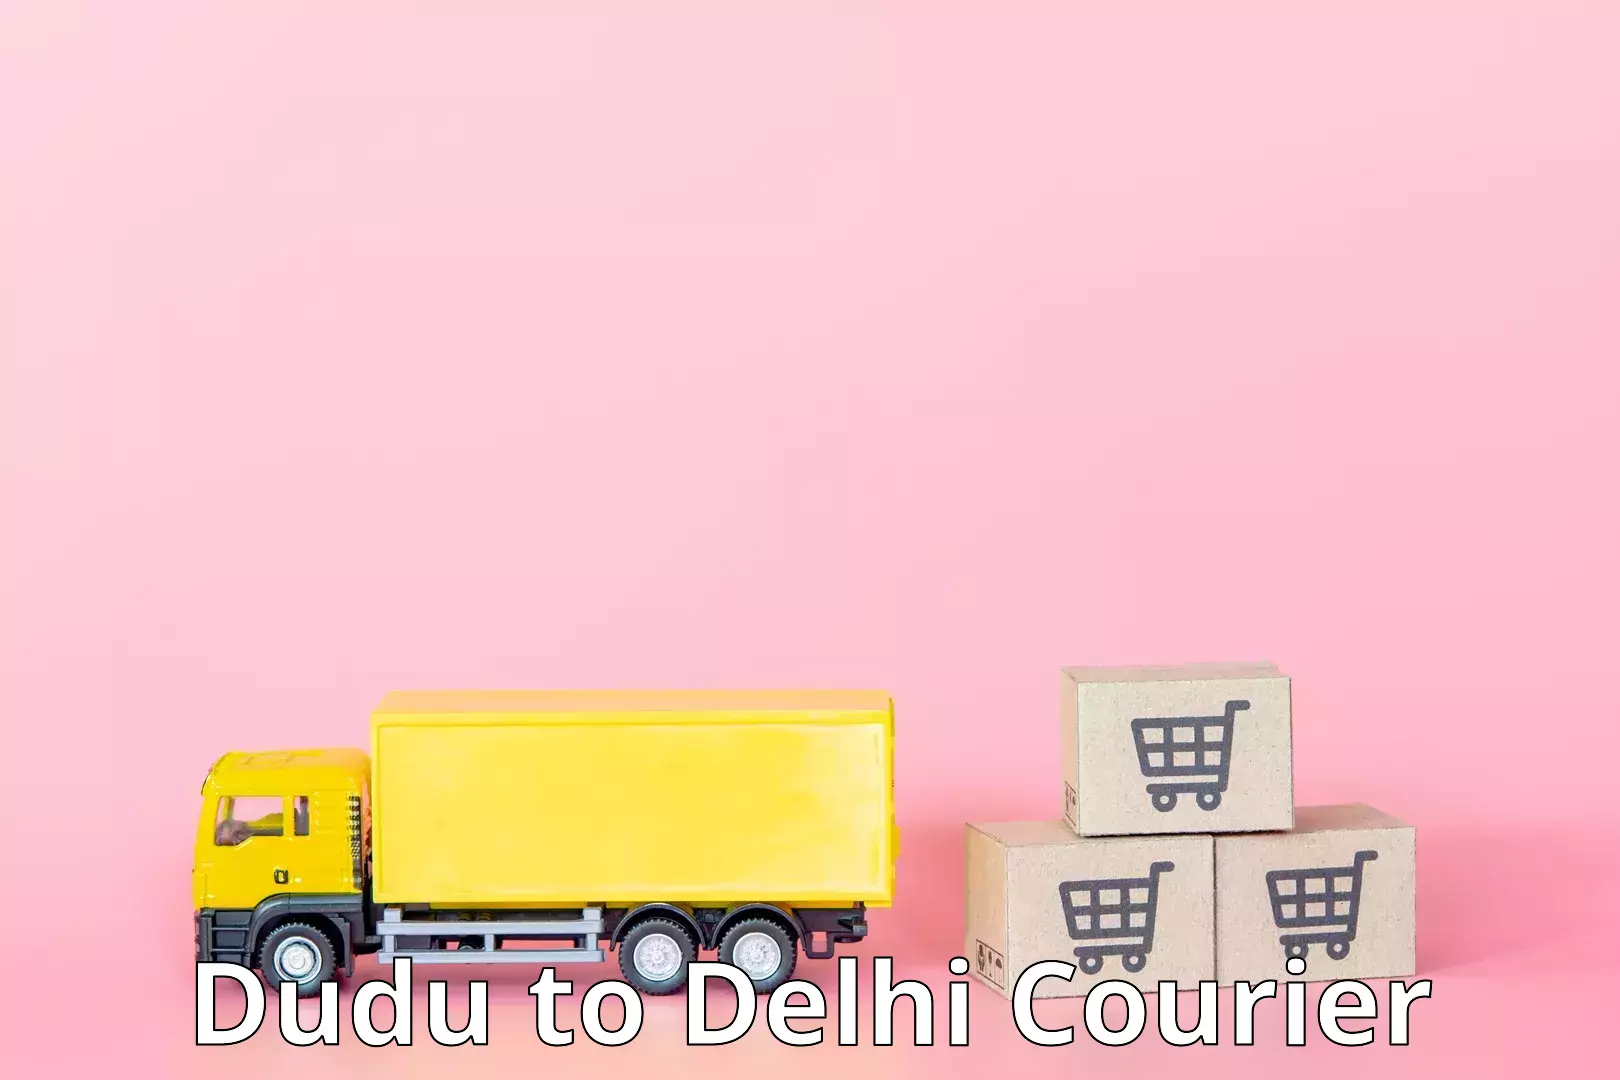 High-performance logistics Dudu to Delhi